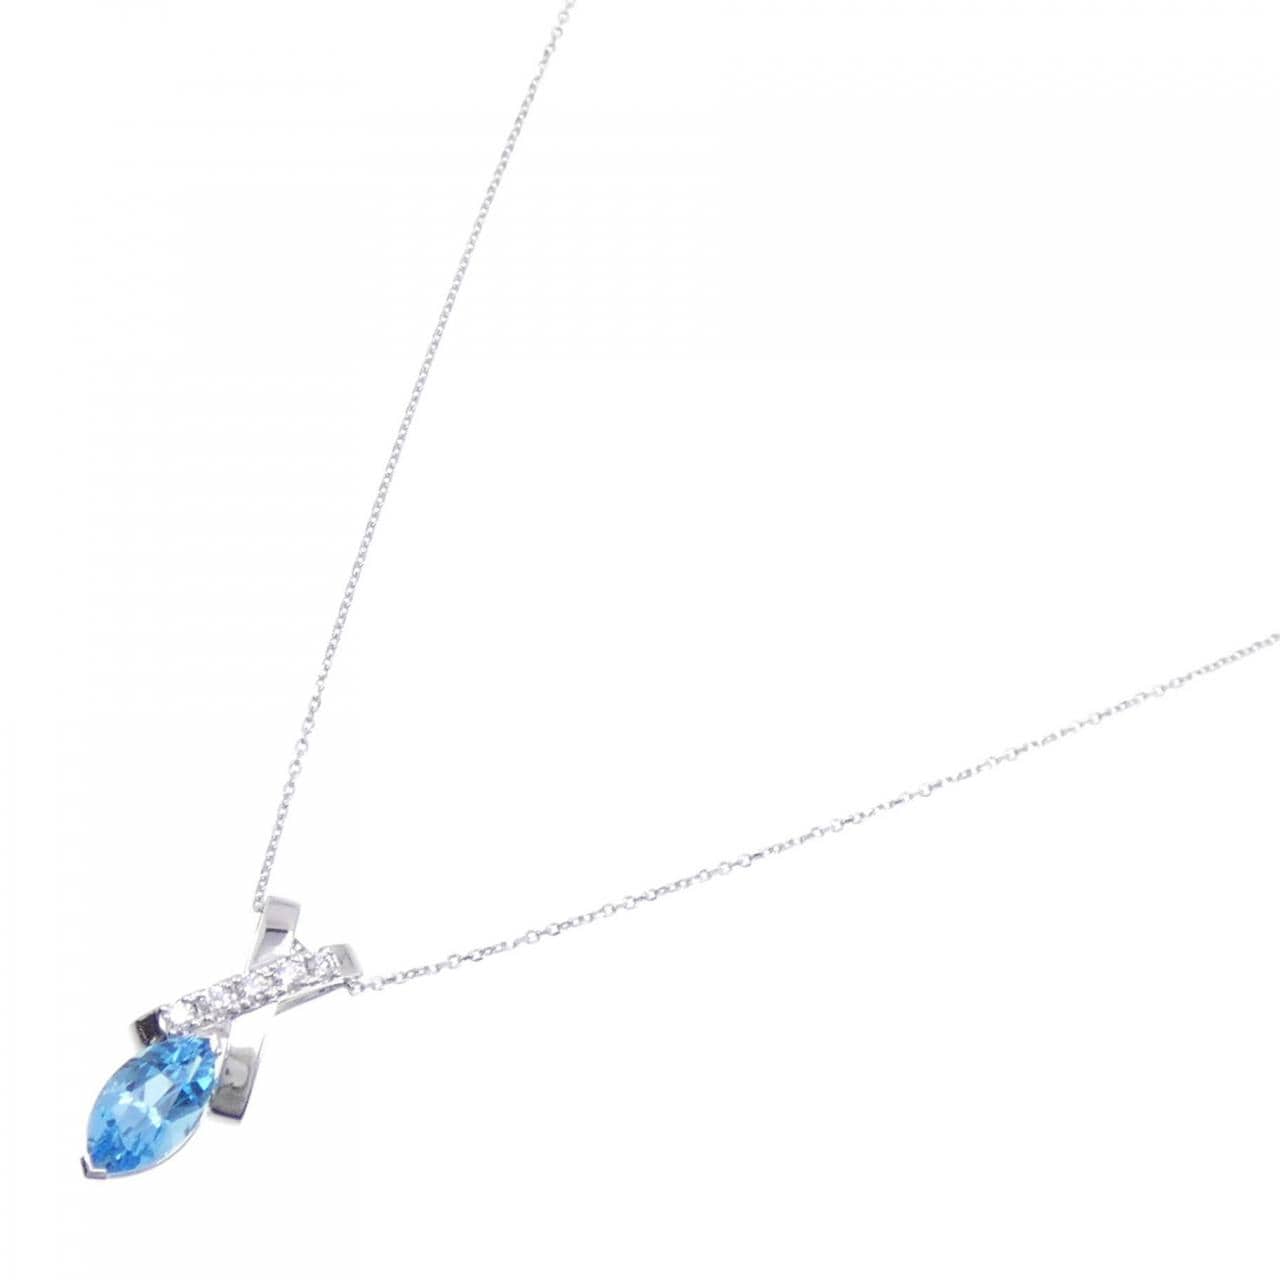 Tasaki blue Topaz necklace